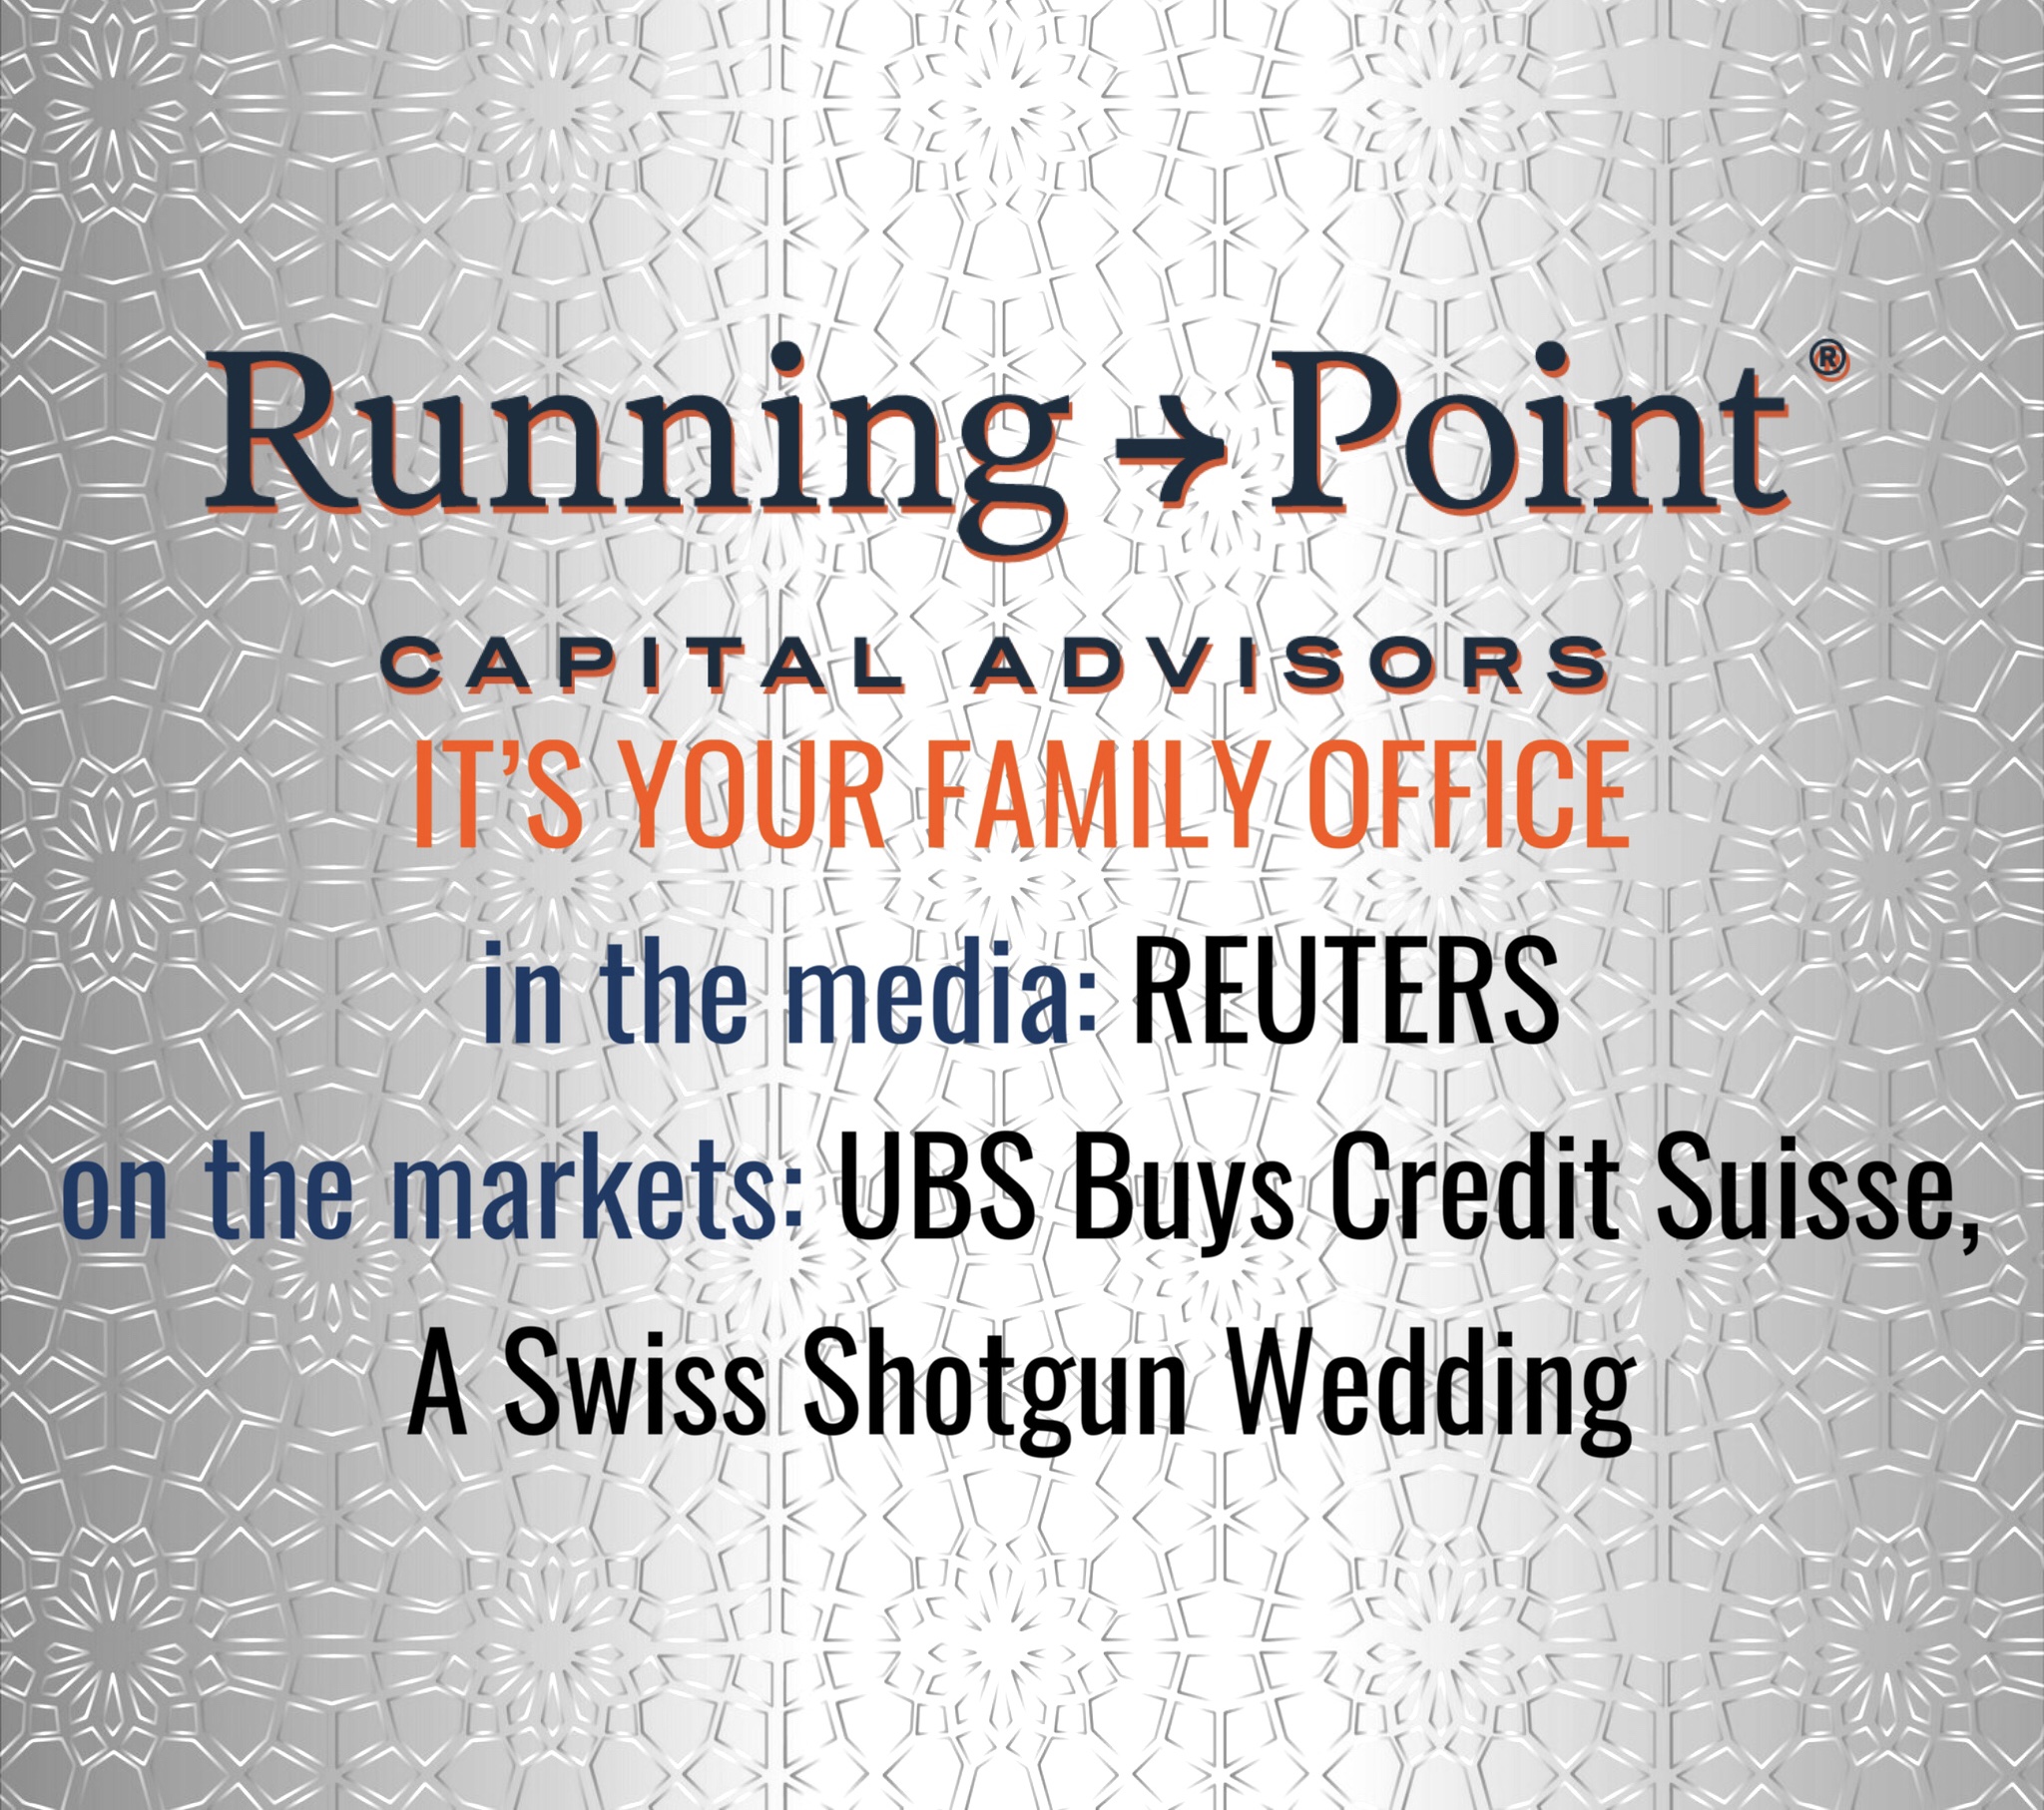 Reuters: UBS Buys Credit Suisse Overnight; A Swiss Shotgun Wedding